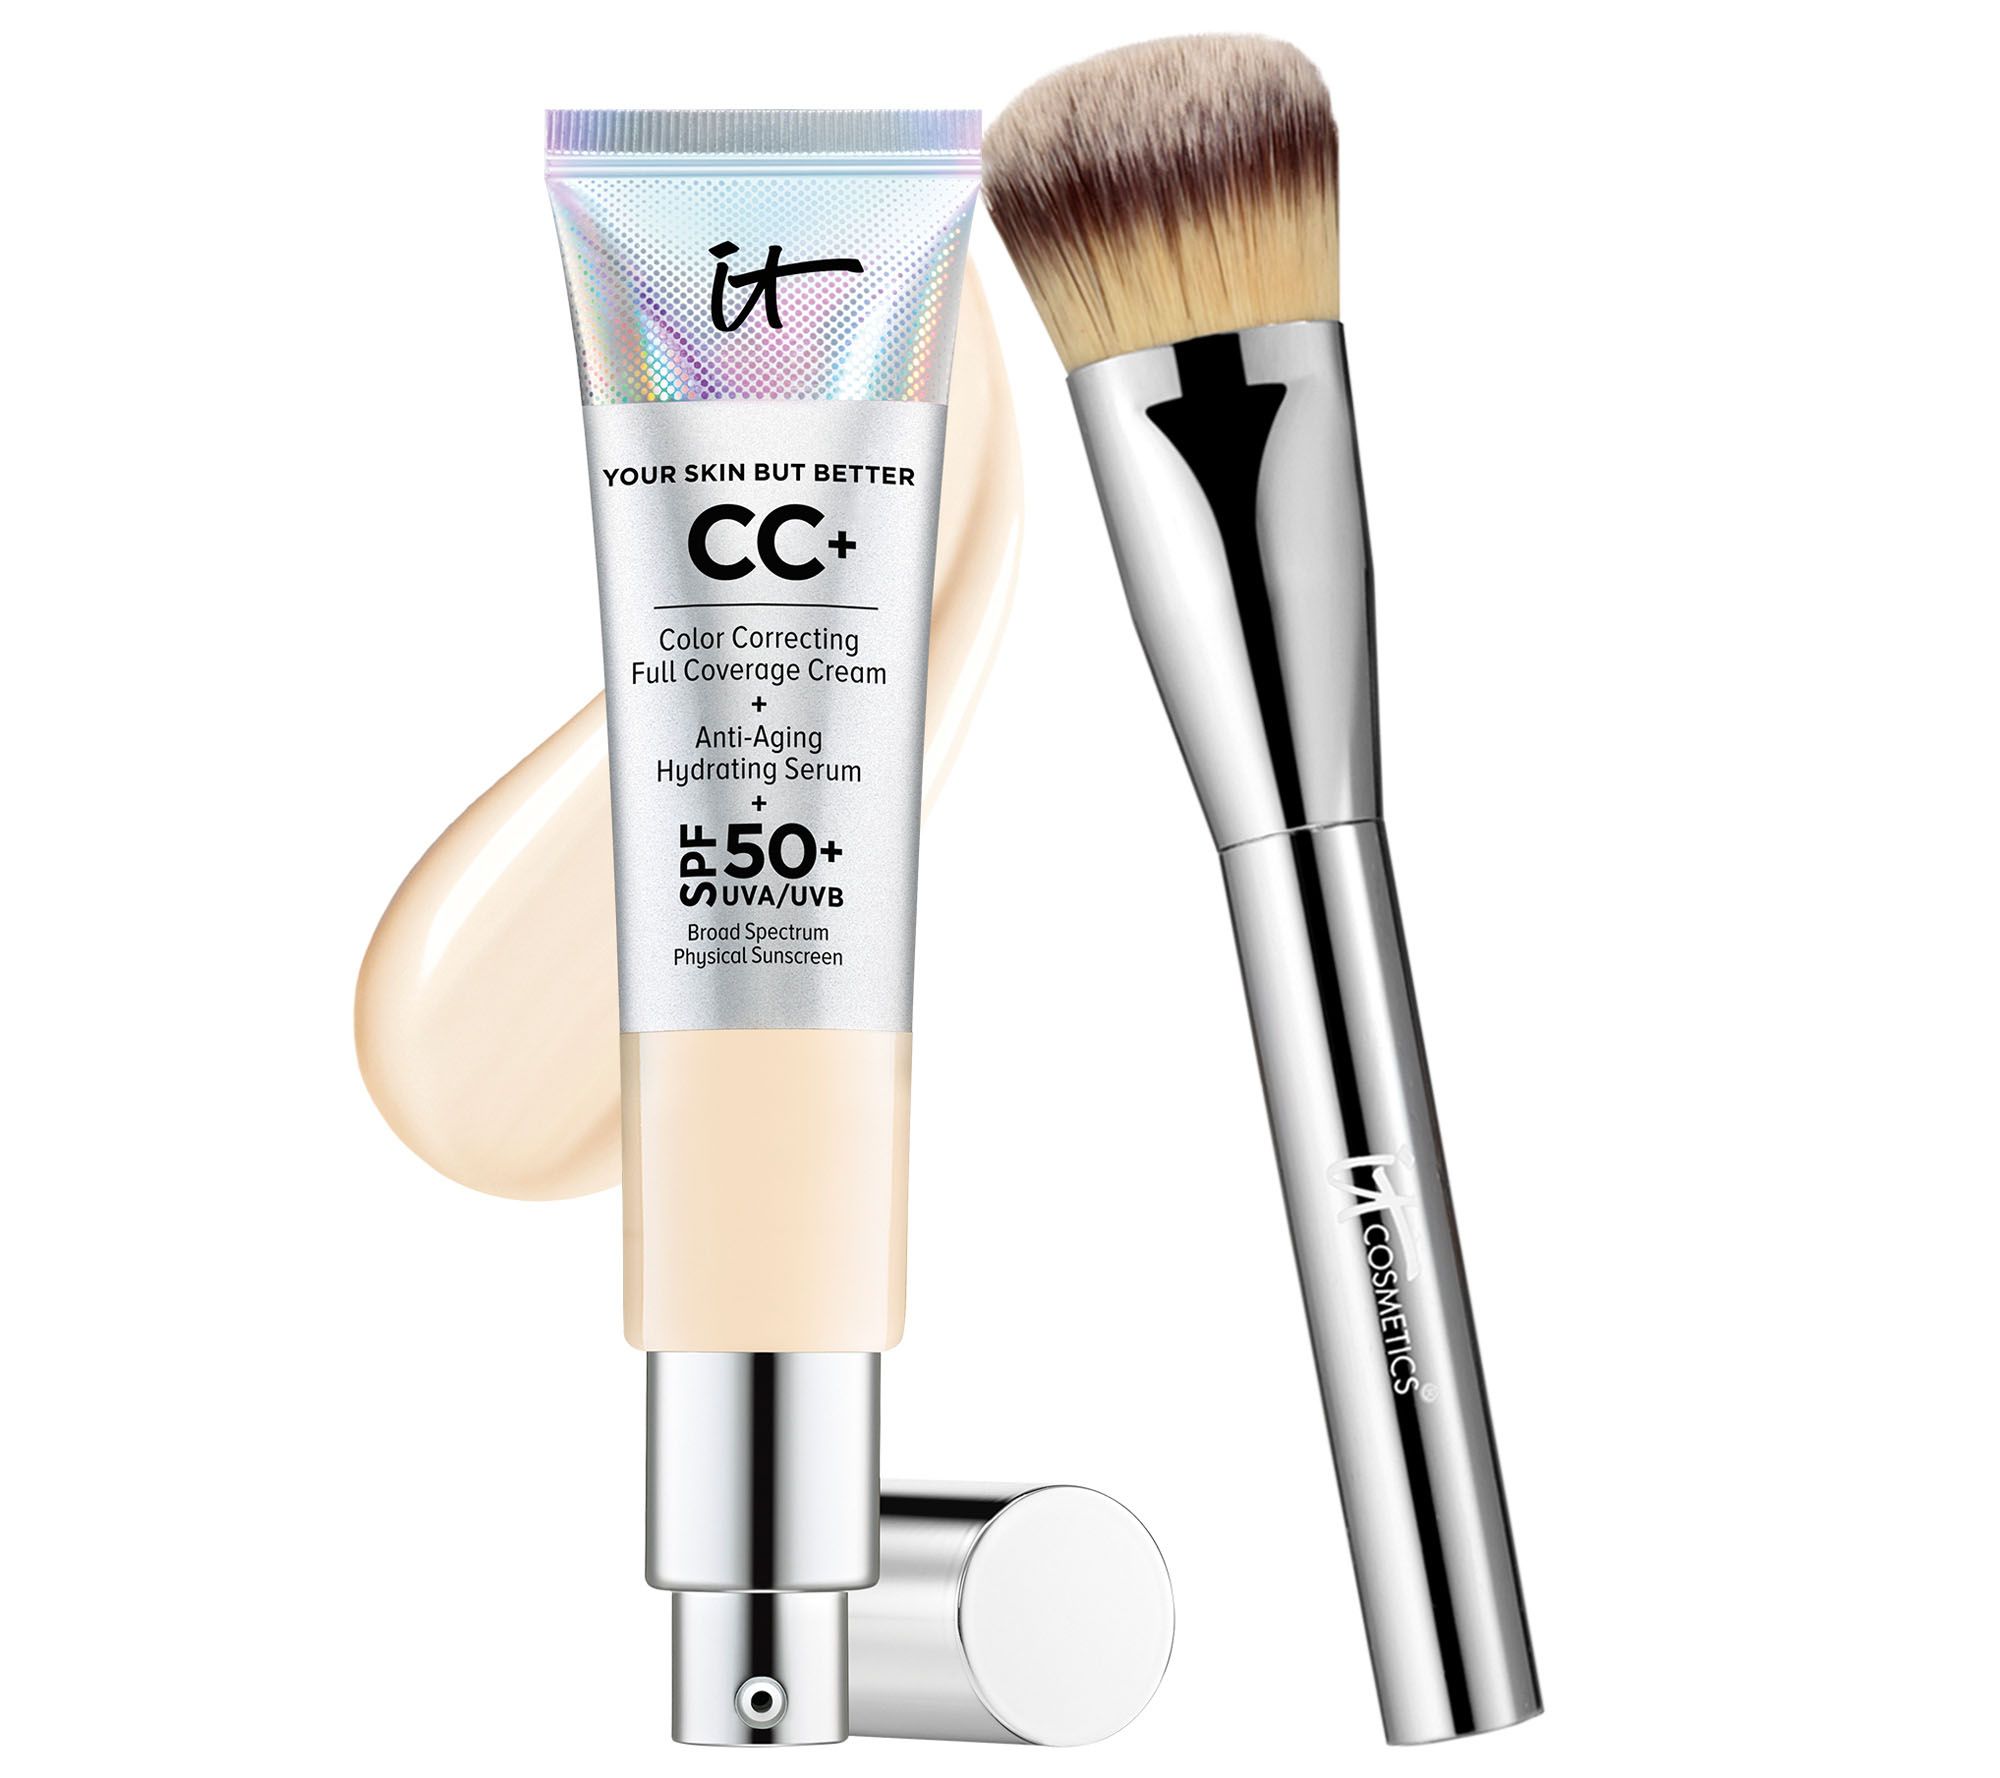  BSMAX Skin Tone Adjusting CC Cream SPF 50,Cosmetics CC